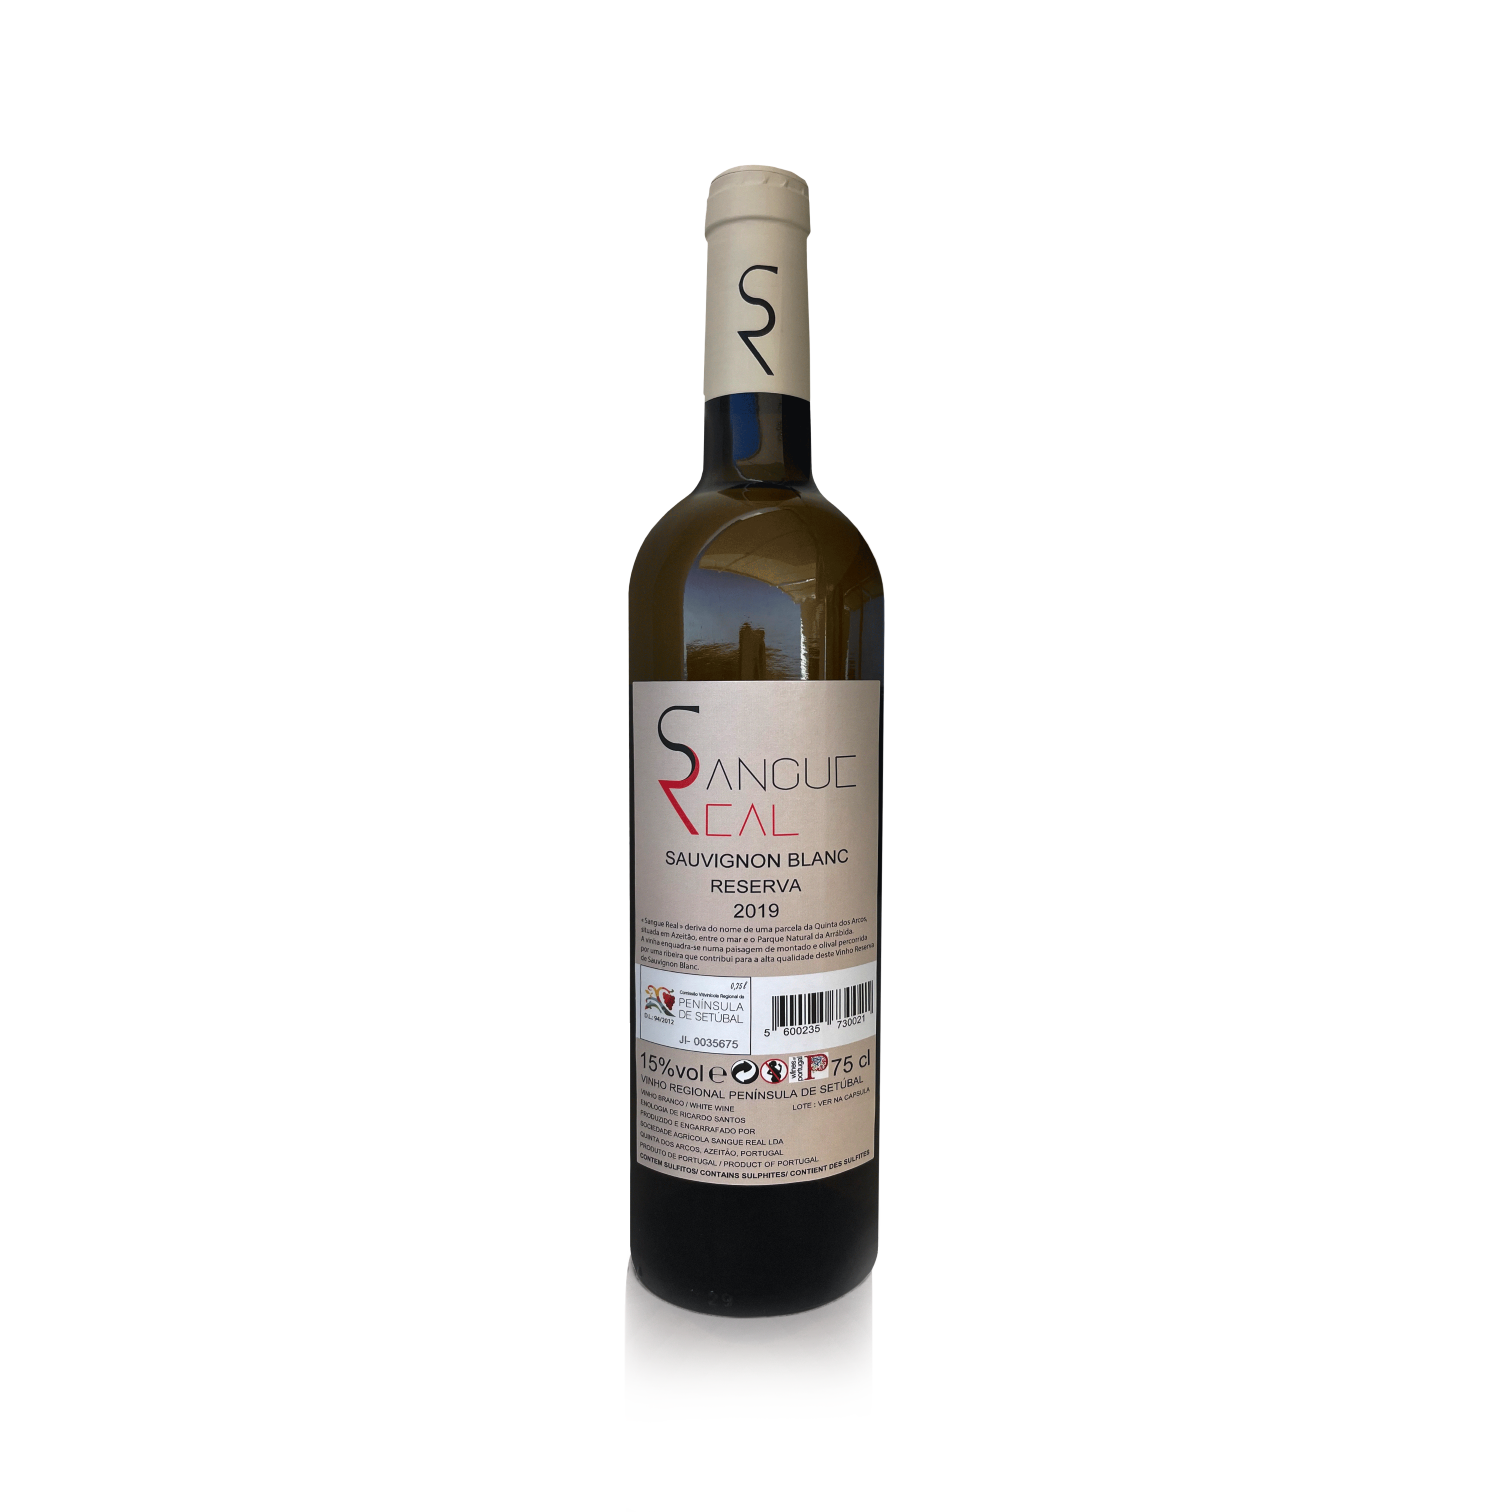 Sangue Real Sauvignon Blanc REserva 2019 - seventy9north.co.uk